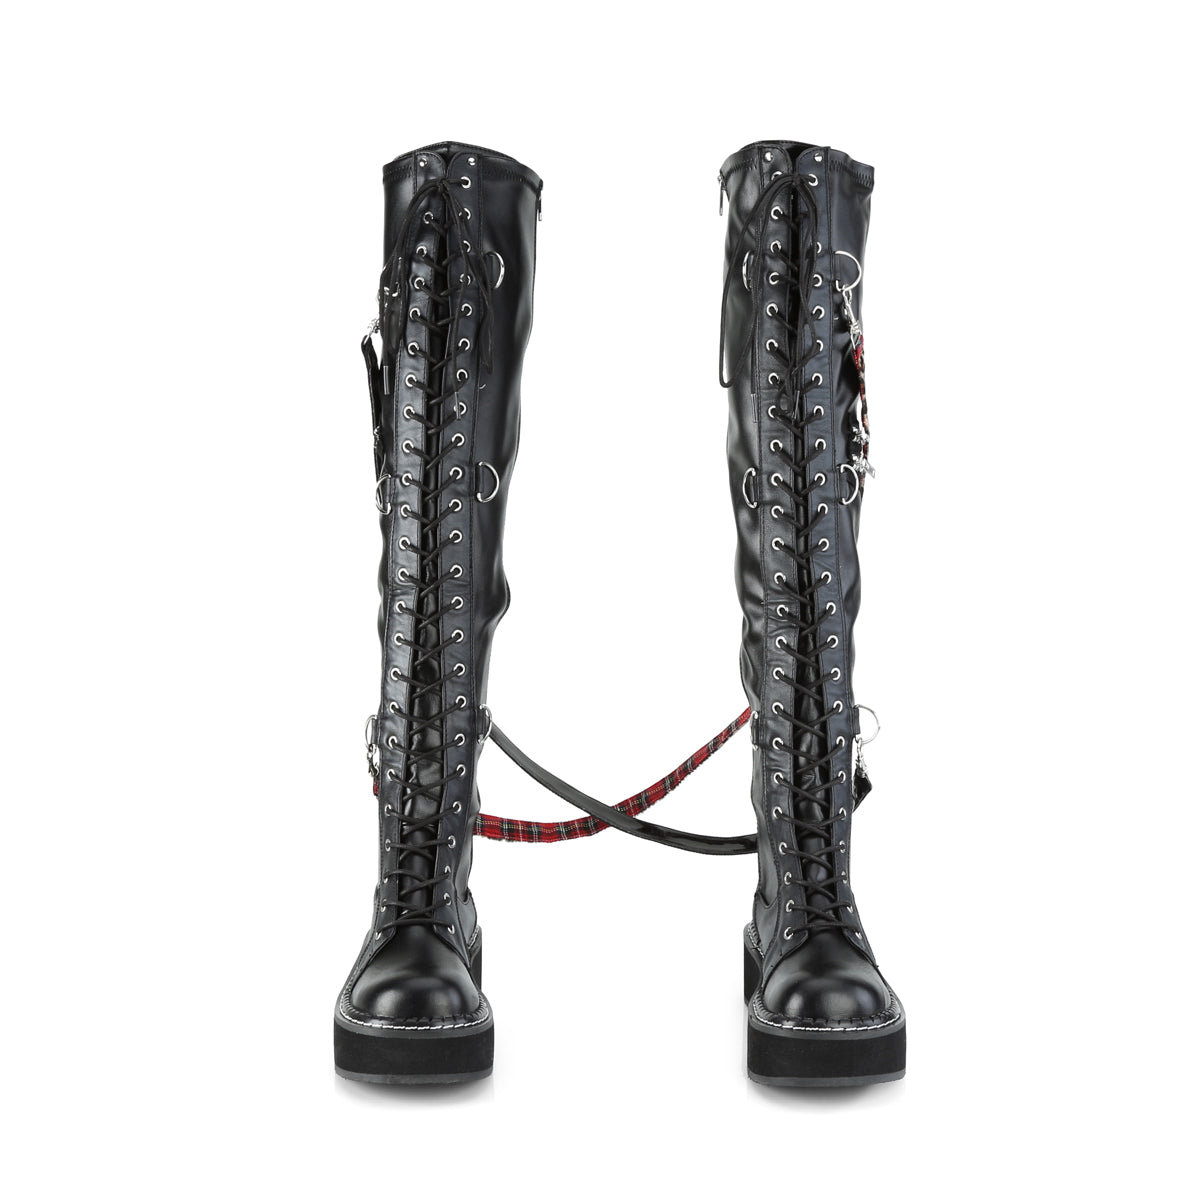 EMILY-377 Demonia Black Stretch Vegan Leather Women's Over-the-Knee Boots [Demonia Cult Alternative Footwear]